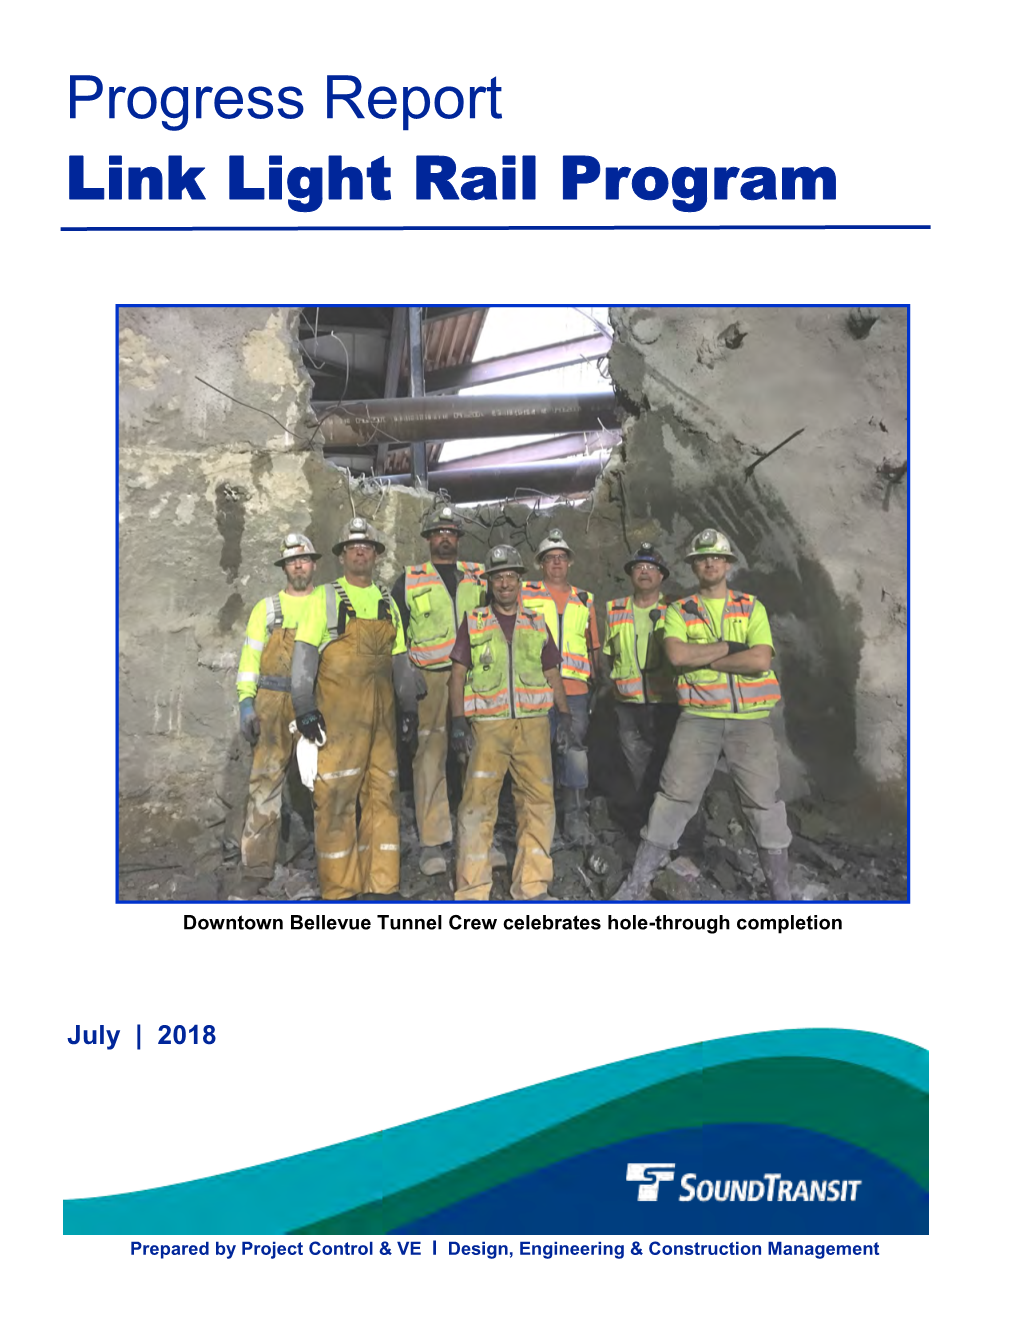 Progress Report Link Light Rail Program